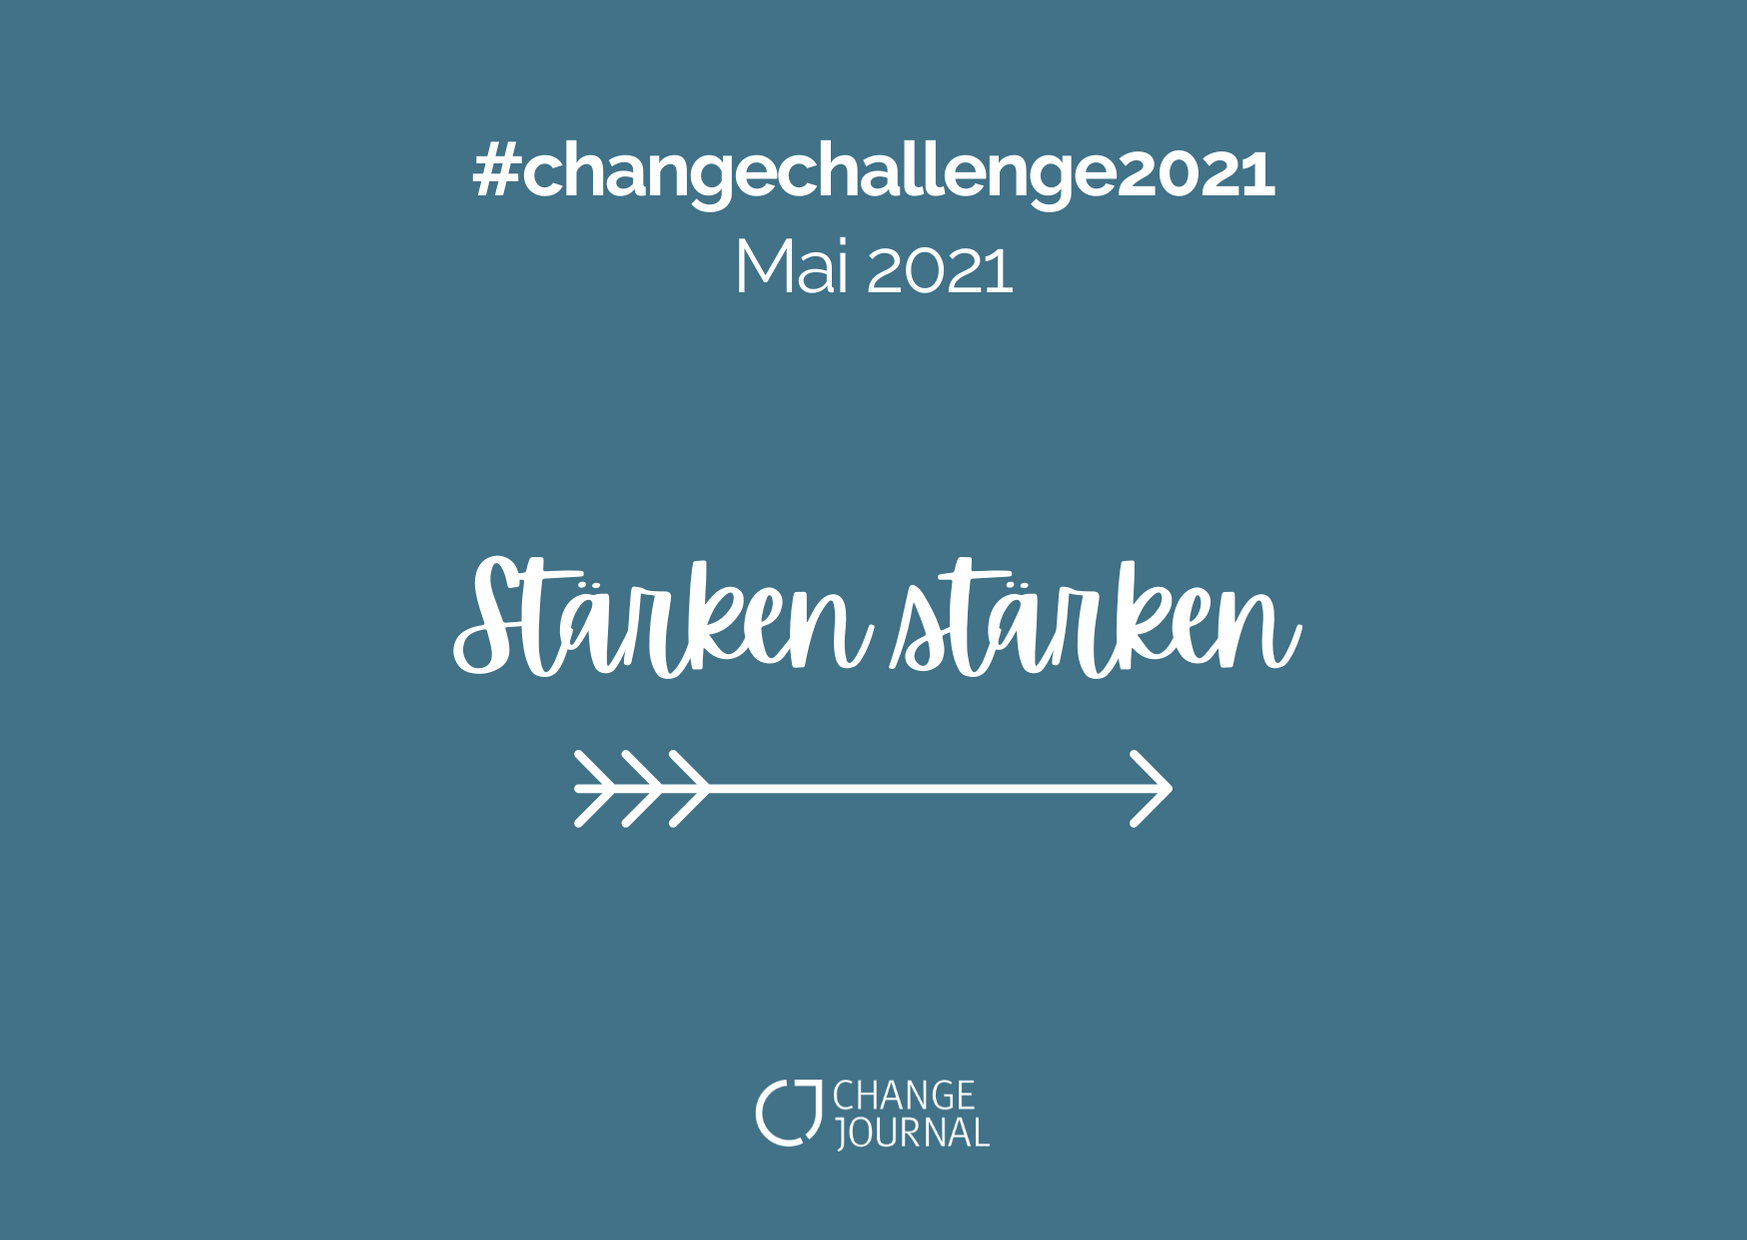 #changechallenge2021 im Mai